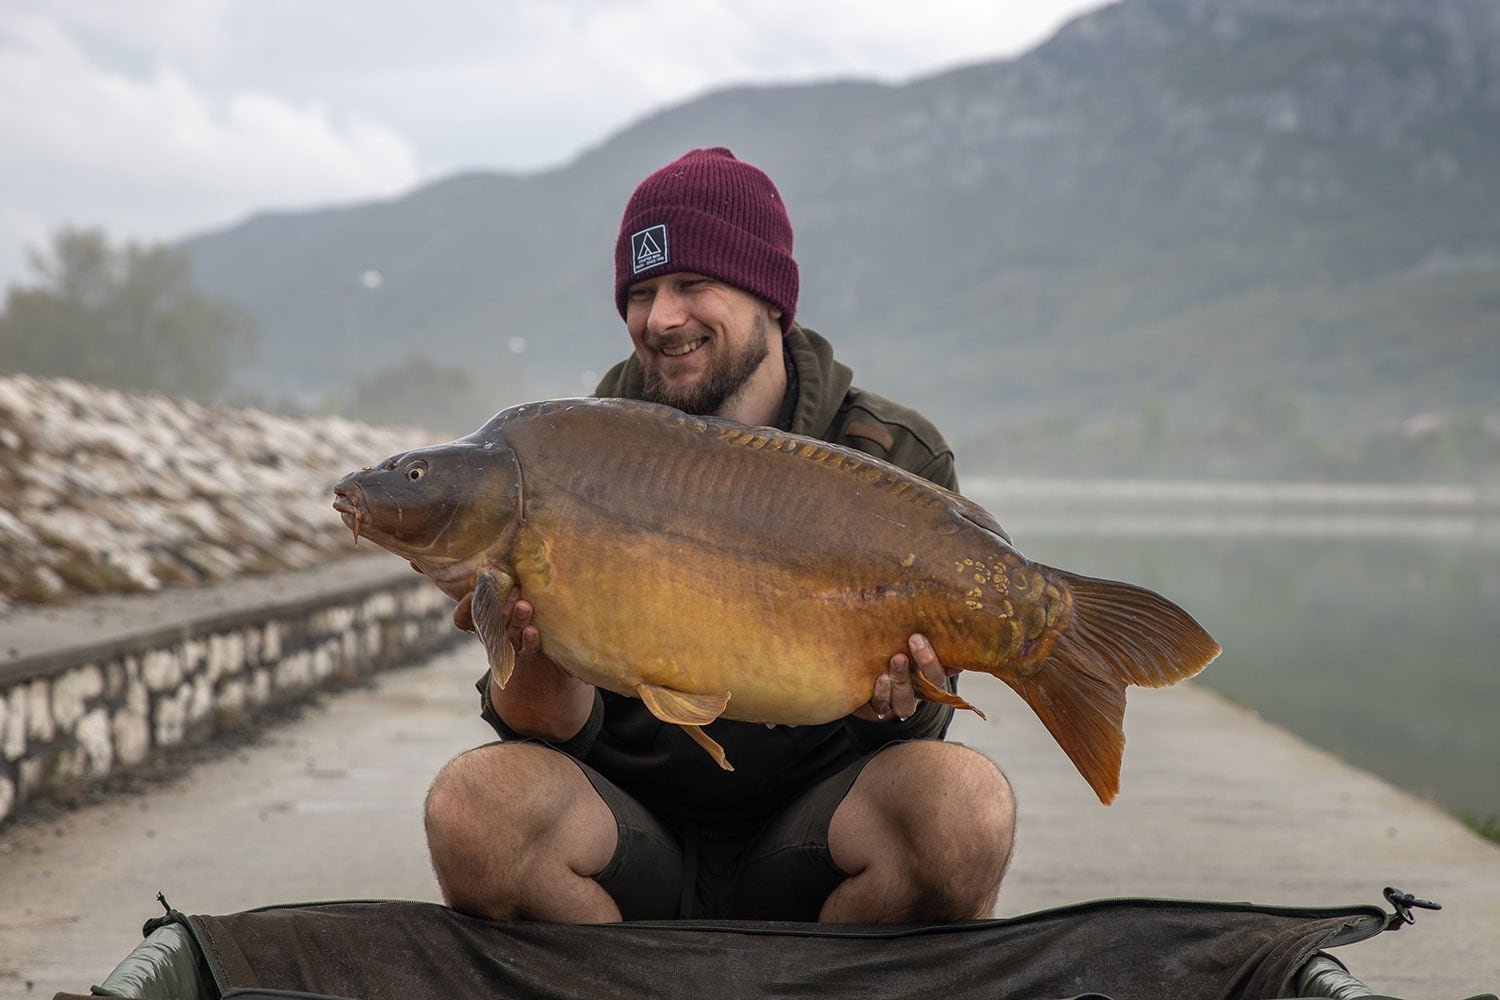 Jamie at Tribalj lake holding common carp